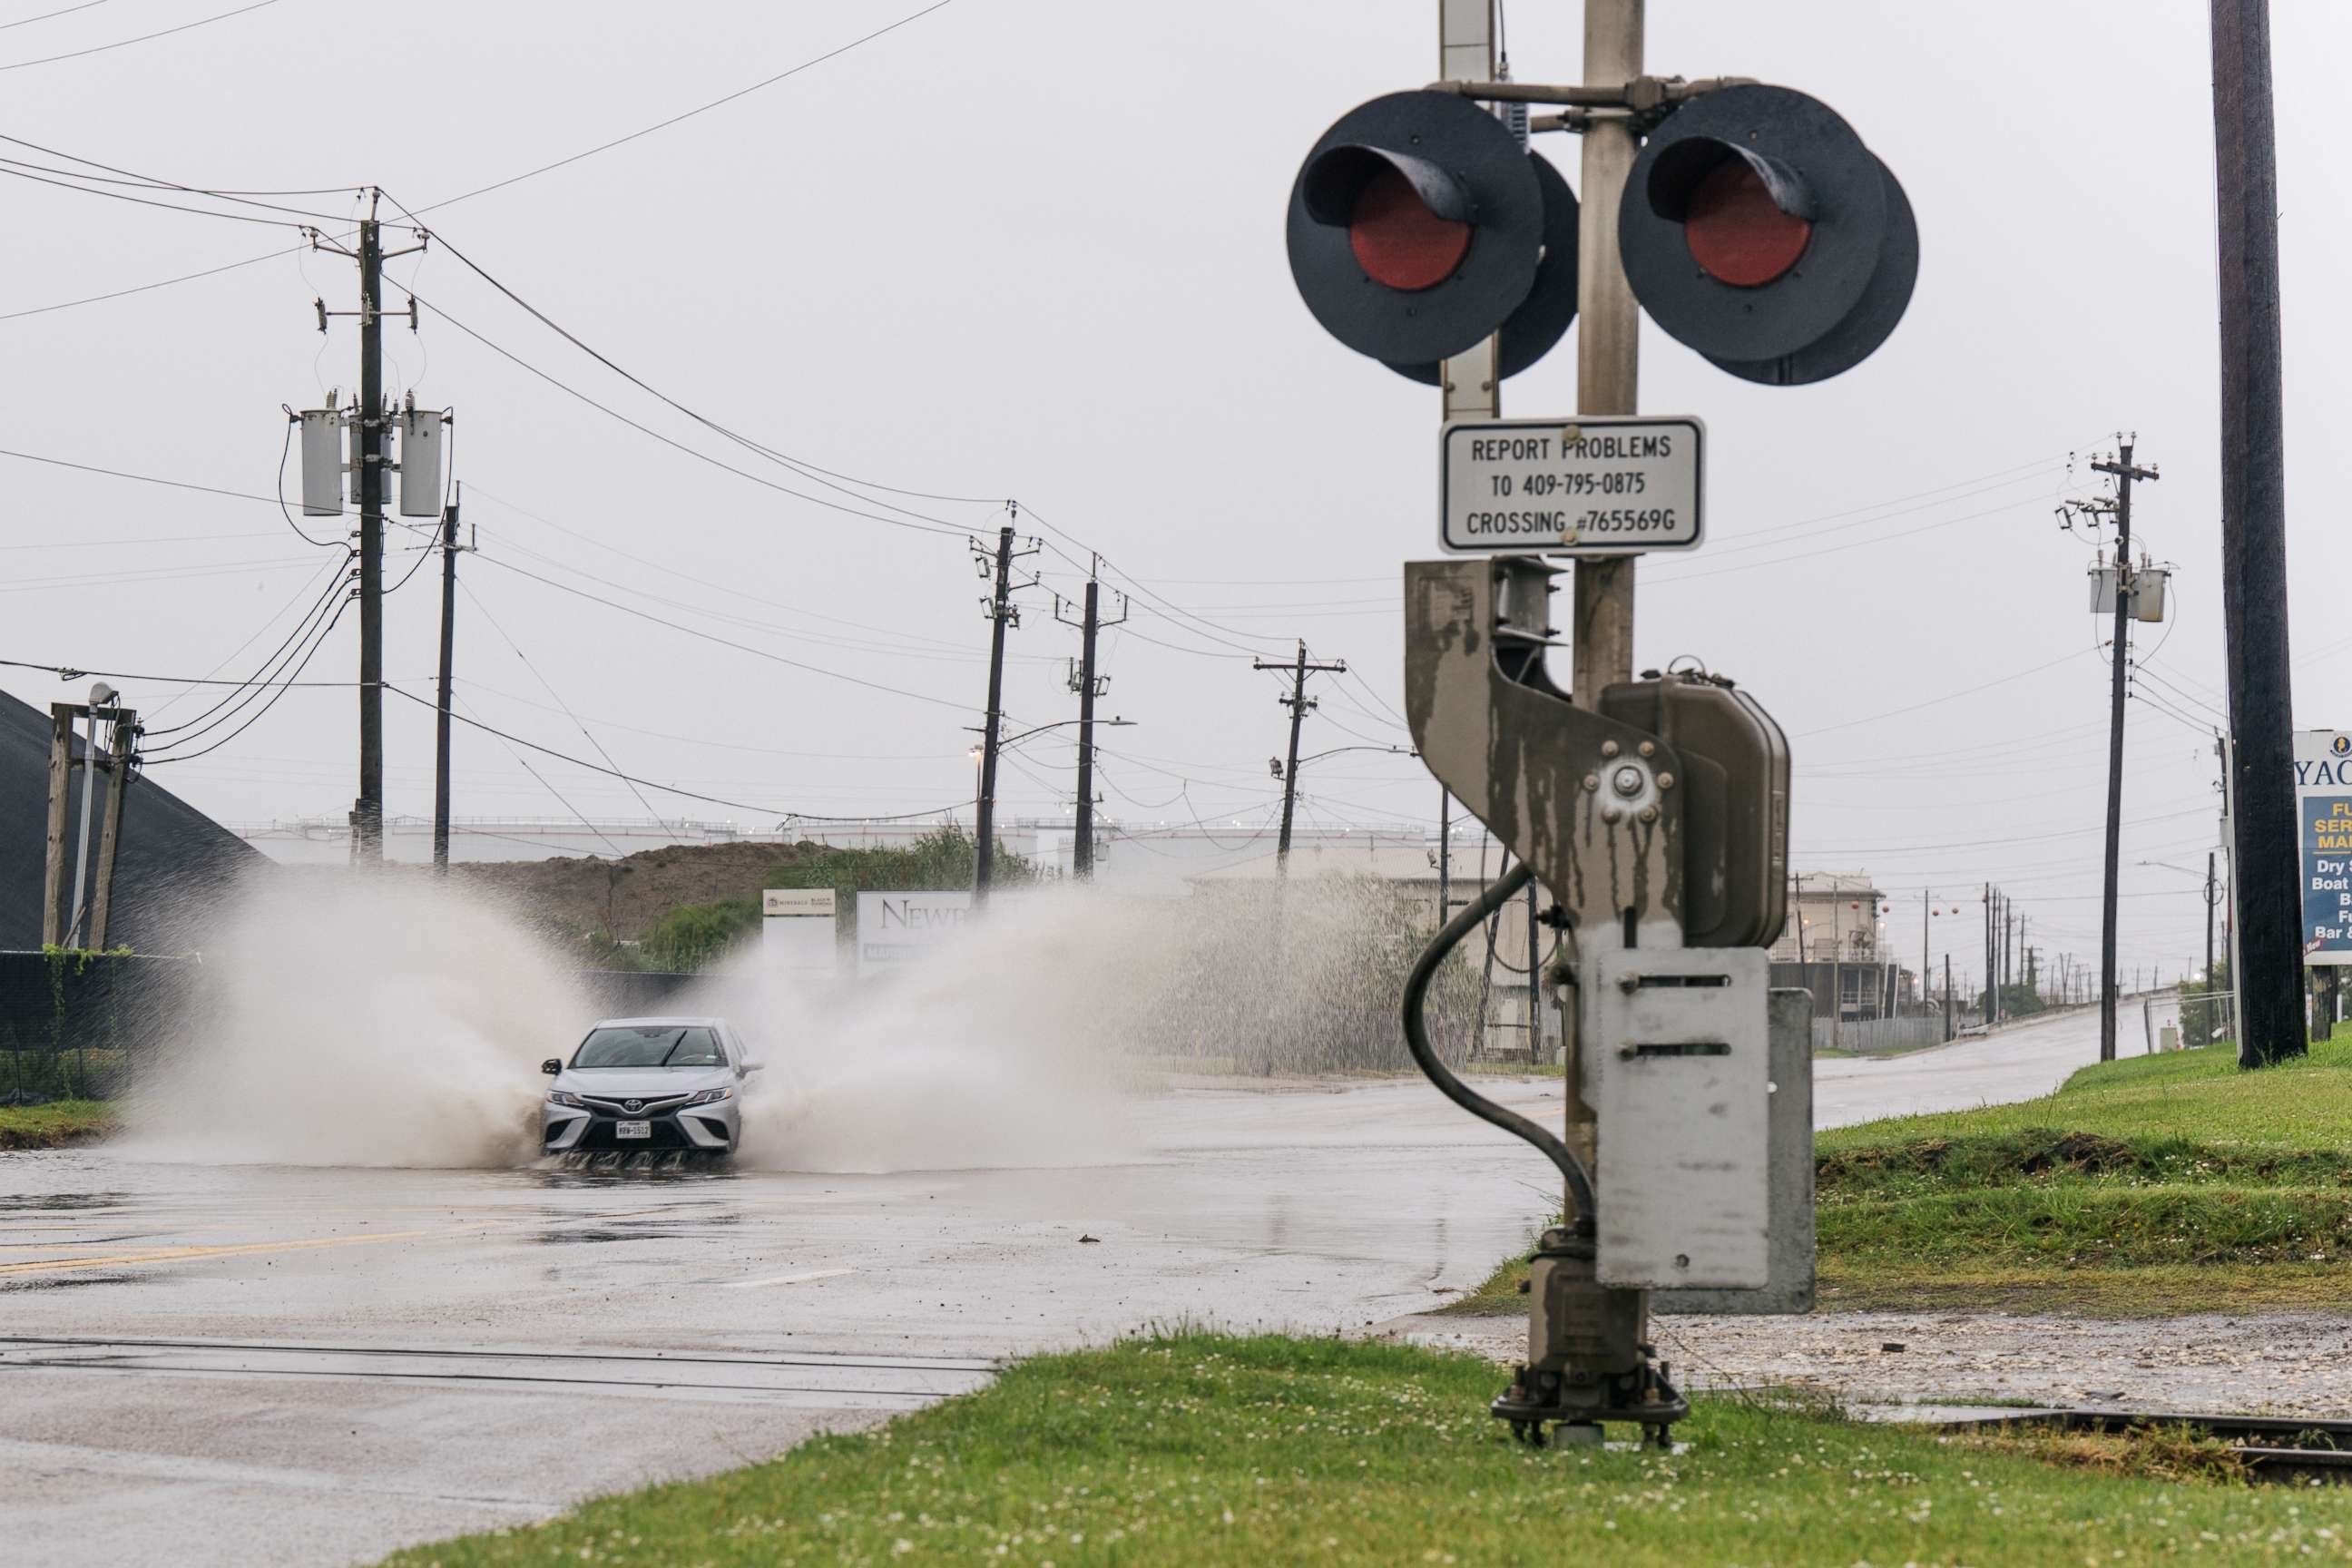 PHOTO: A car speeds through a flooded street ahead of the Tropical Storm Nicholas, Sept. 13, 2021 in Galveston, Texas.